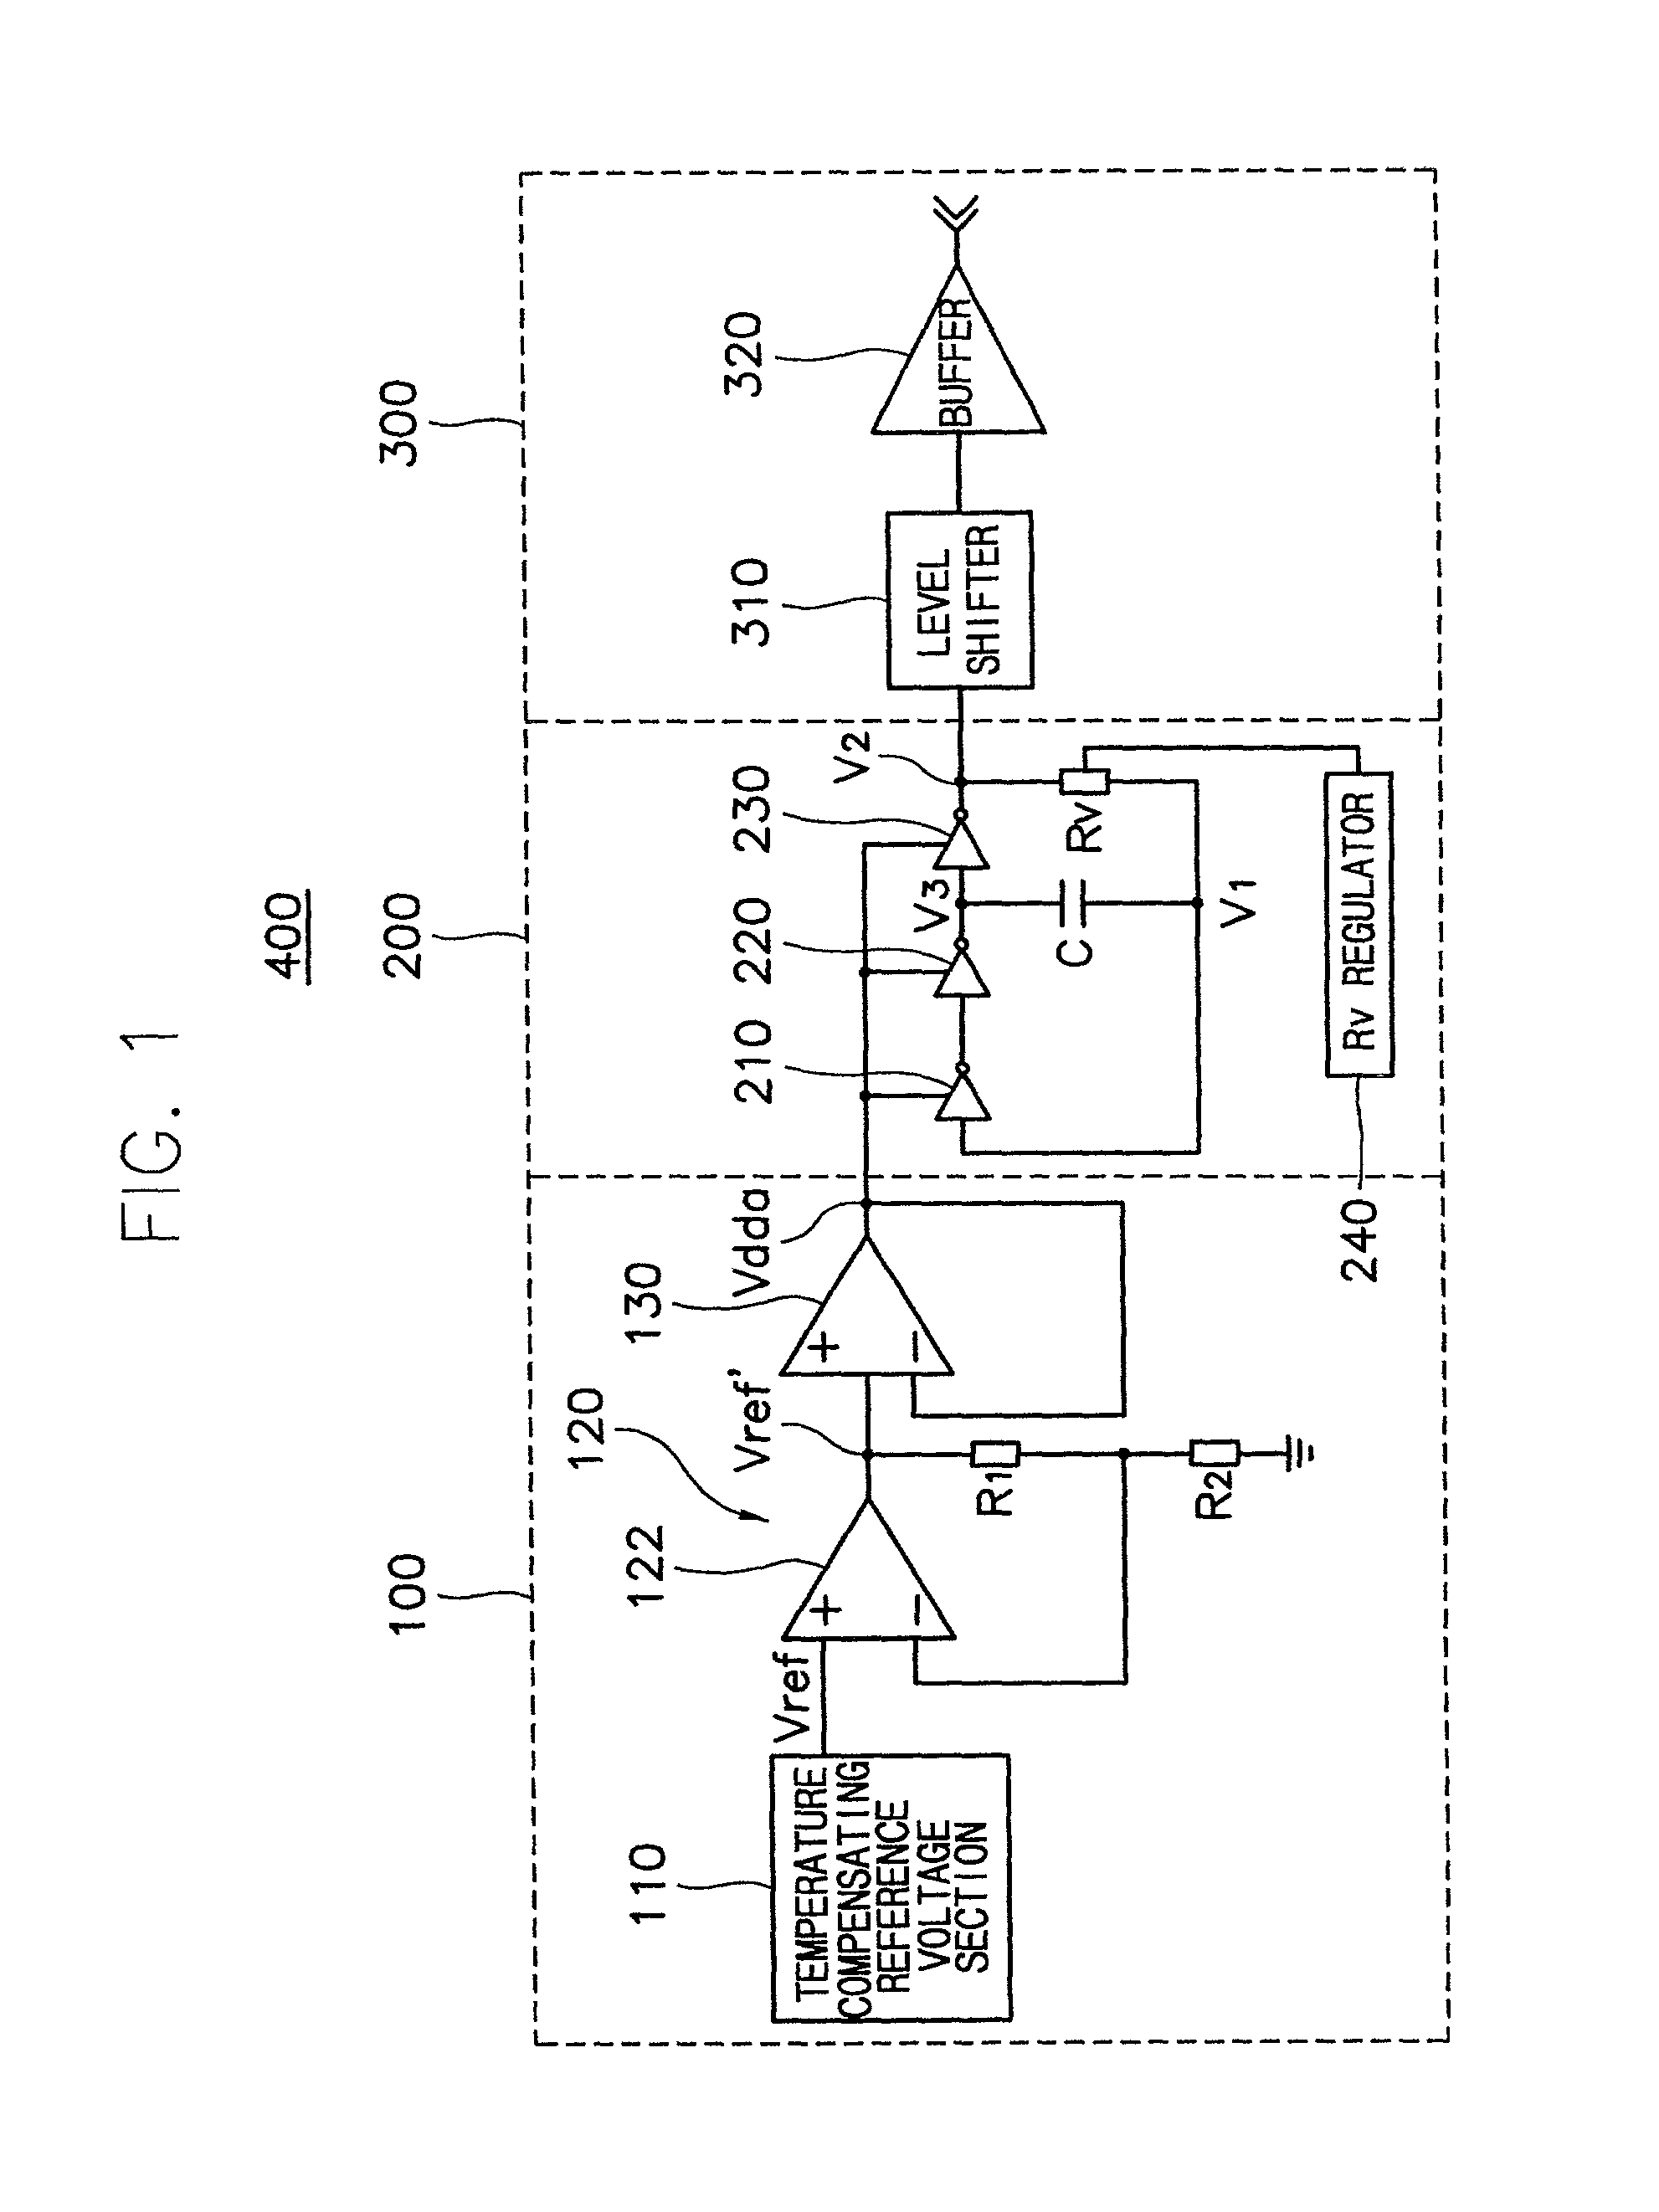 Micropower RC oscillator